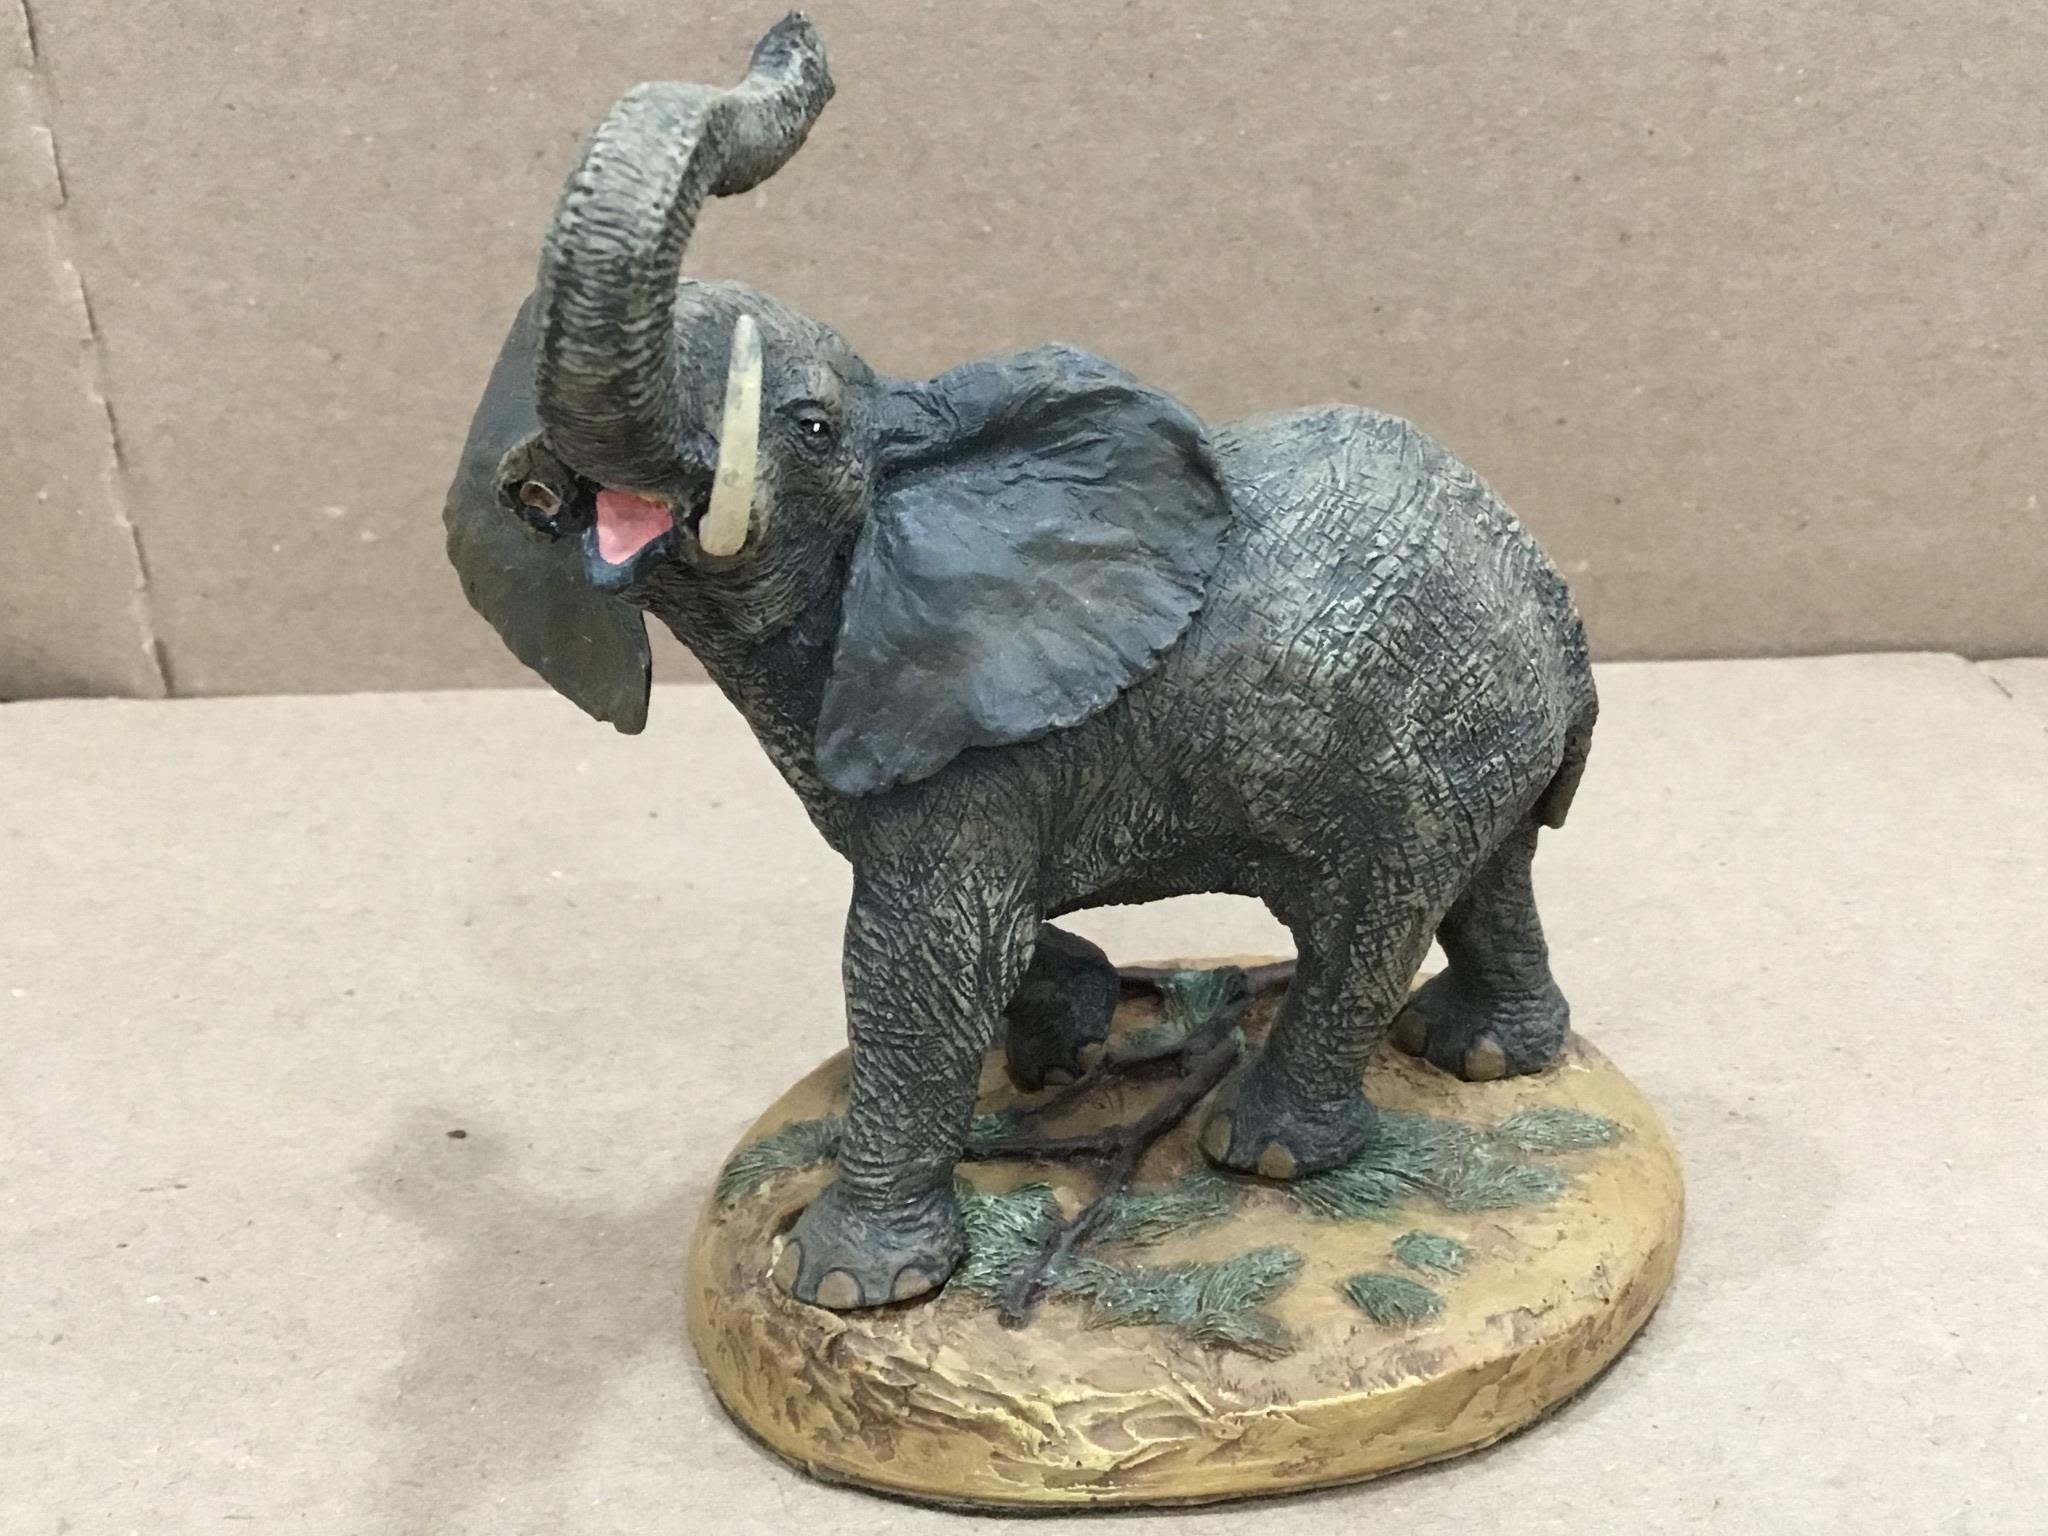 1987 Franklin Mint Wildlife Preservation Figurine